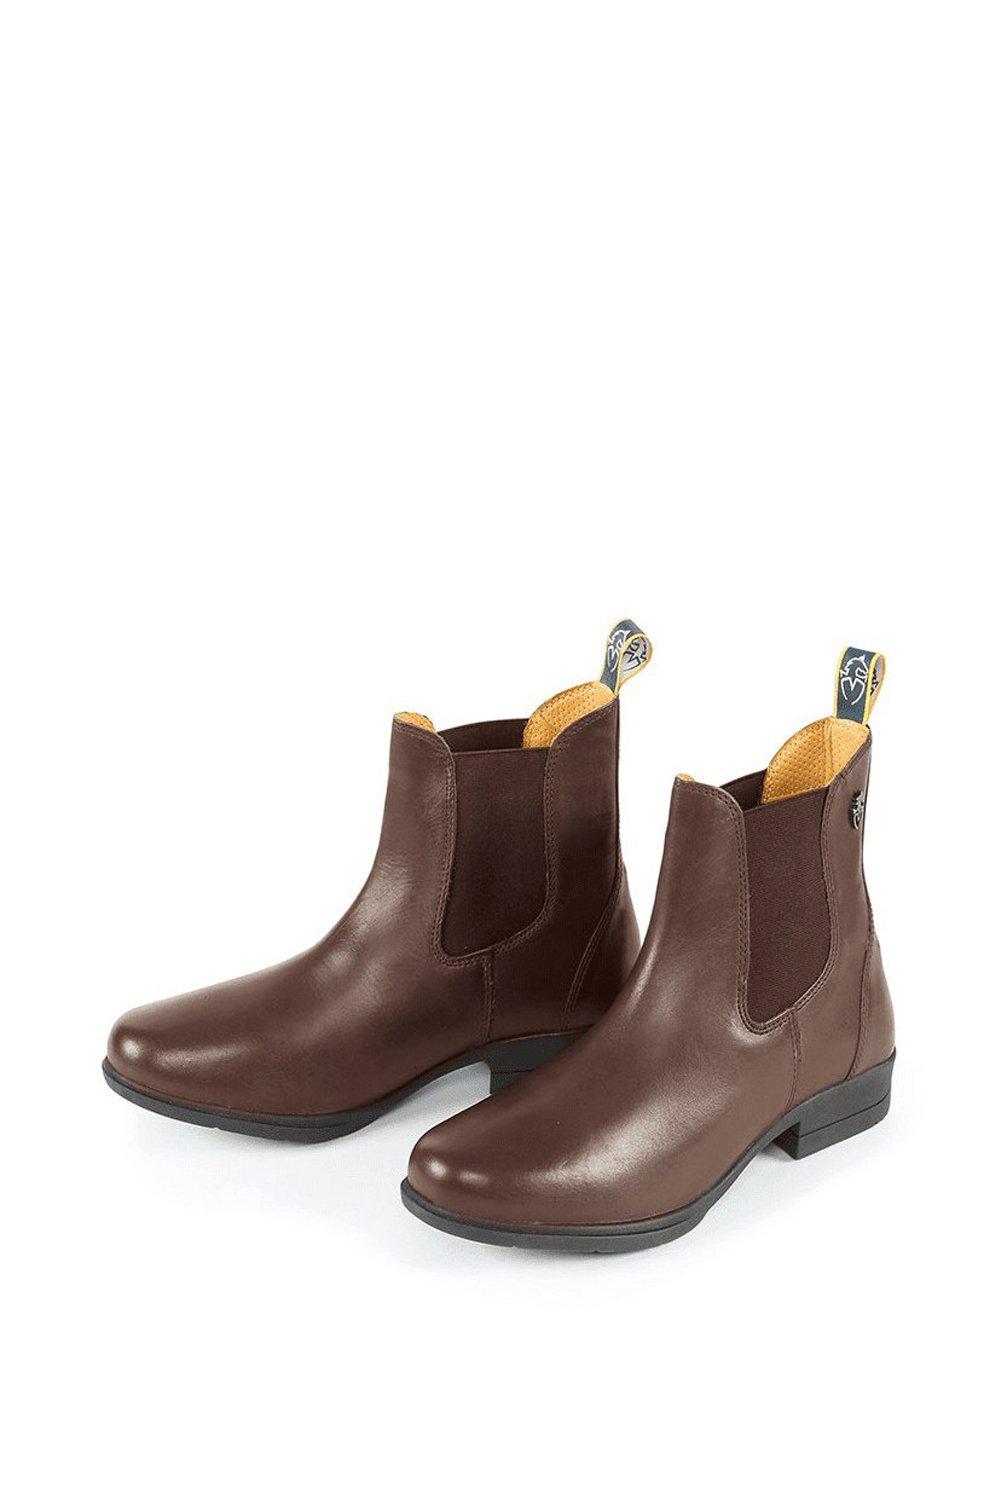 Ботинки Alma Джодхпур Moretta, коричневый кожаные фундаментные ботинки джодхпур dublin коричневый